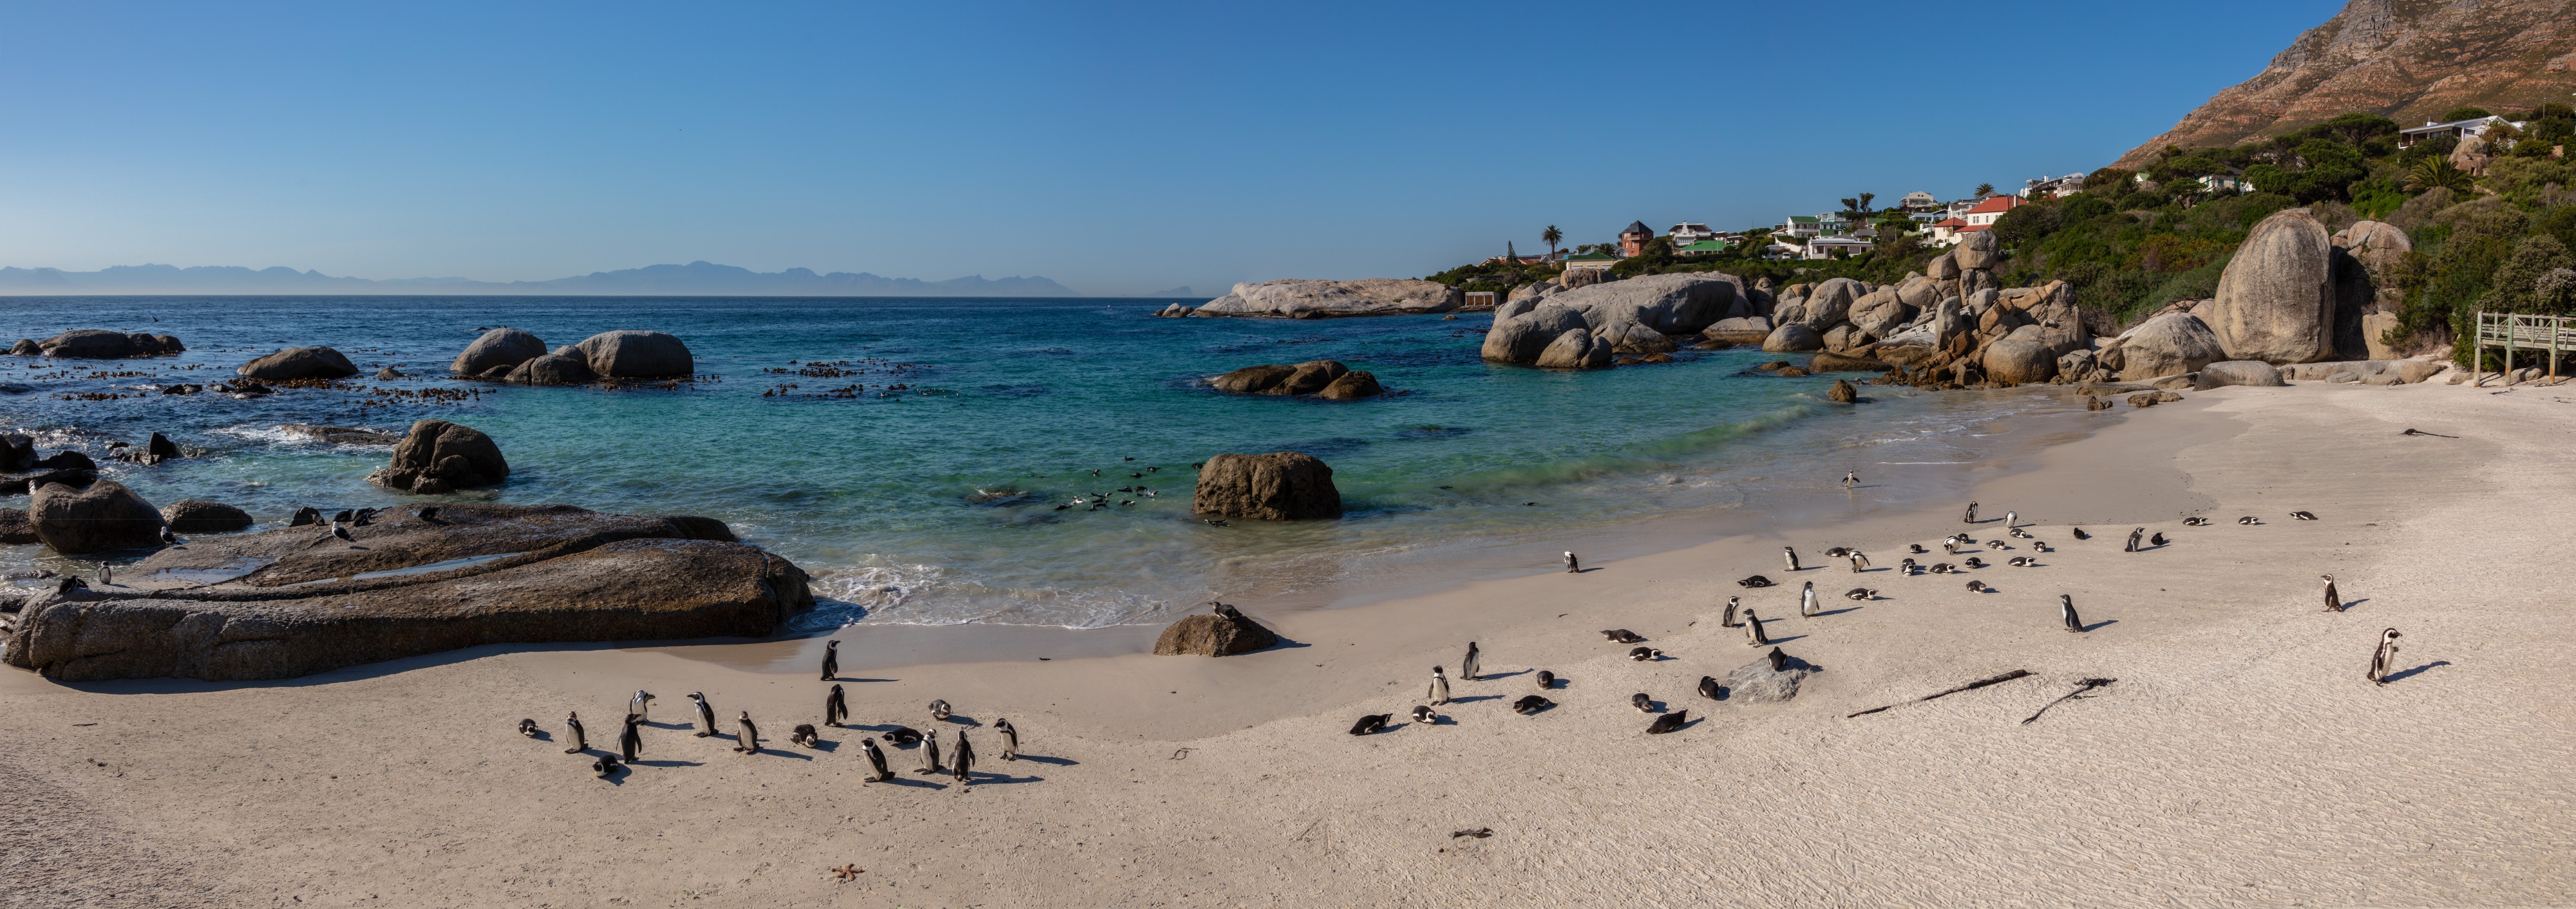 Pingüinos de El Cabo (Spheniscus demersus), Playa de Boulders, Simon's Town, Sudáfrica, 2018-07-23 PAN 29-31